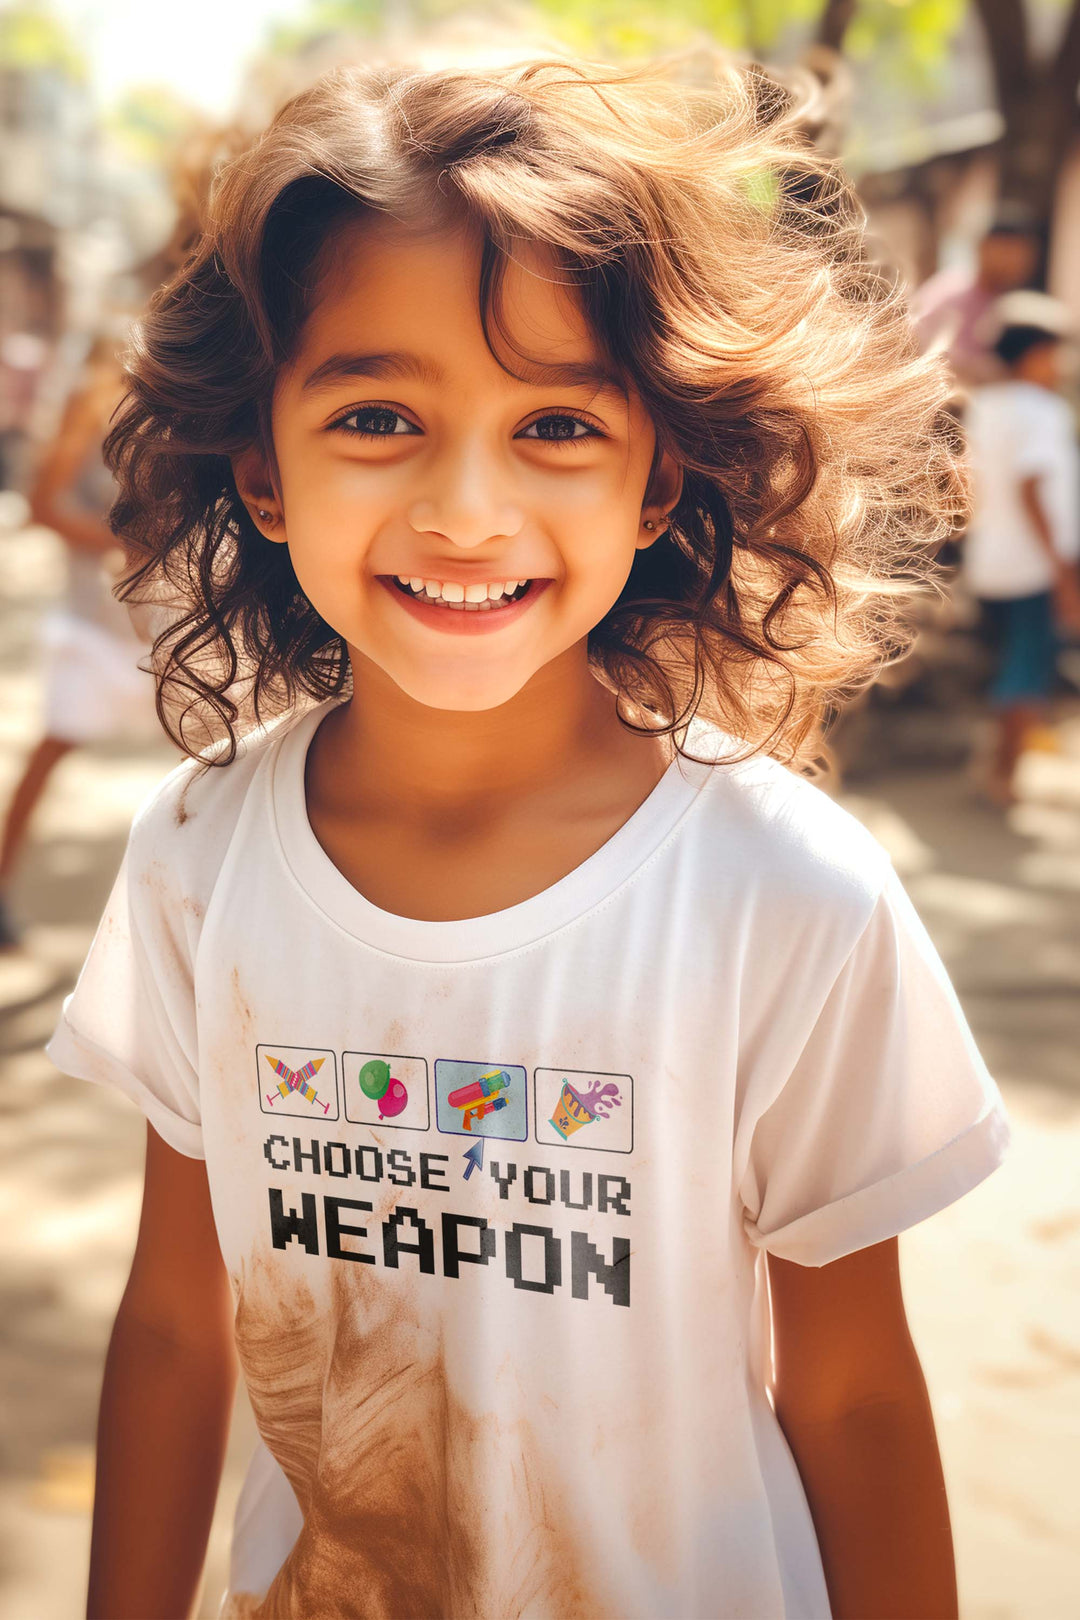 Choose Your Weapon Kids T Shirt